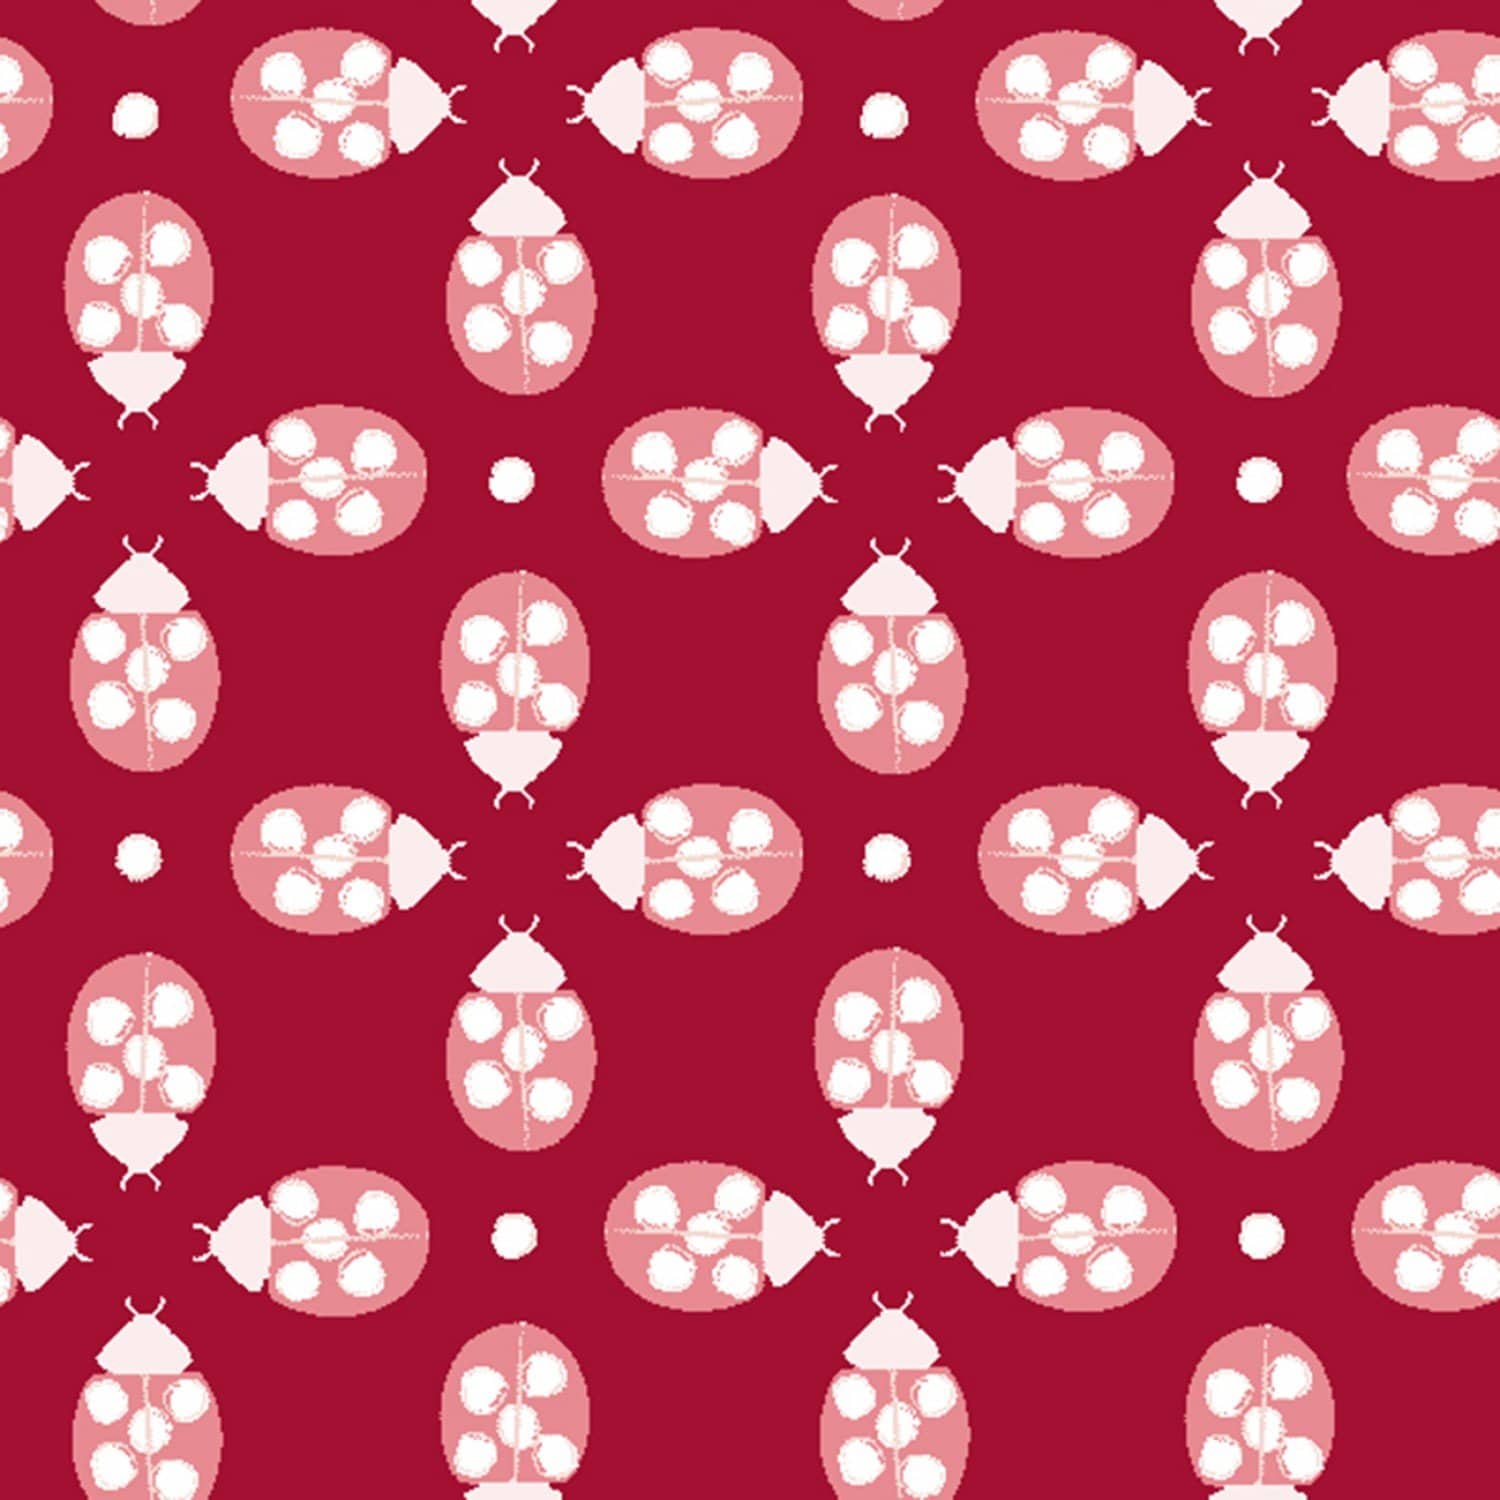 Ladybug Mania - Light Red Ladybug- Y3177-4 - Clothworks - Kids Prints - Flower